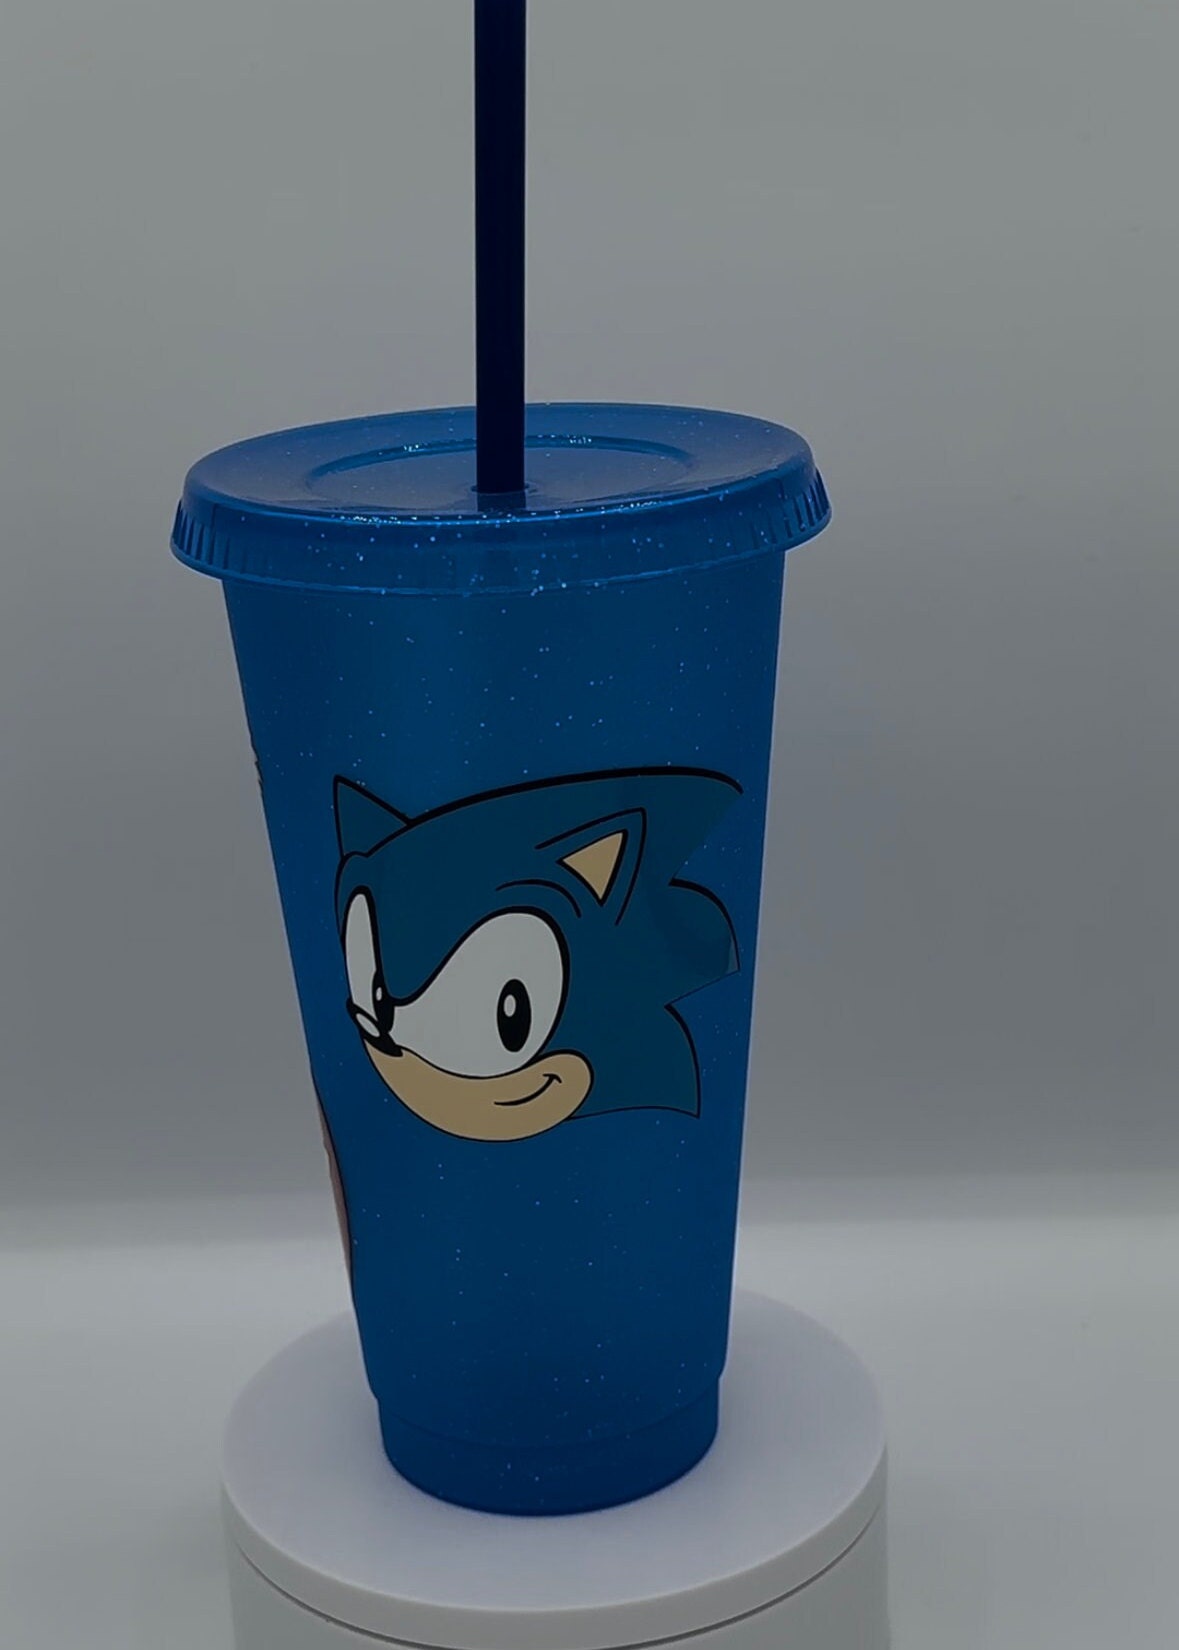 Sonic The Hedgehog Mugs High-Temperature Discoloration Ceramic Water Cups  Cartoon Creative Drink Tea Coffee Milk Juice Glasses